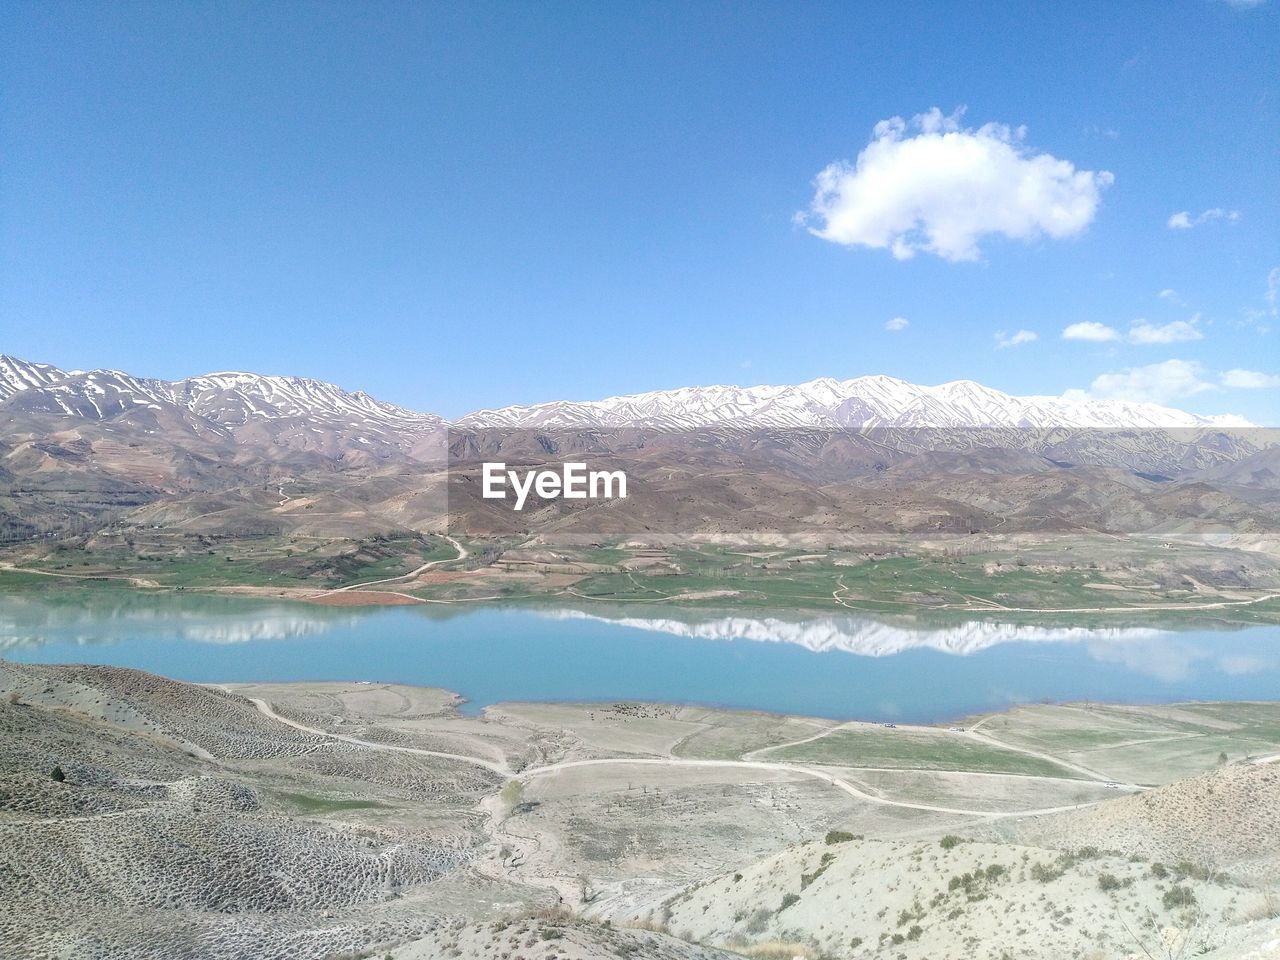 SCENIC VIEW OF LAKE AGAINST MOUNTAIN RANGE